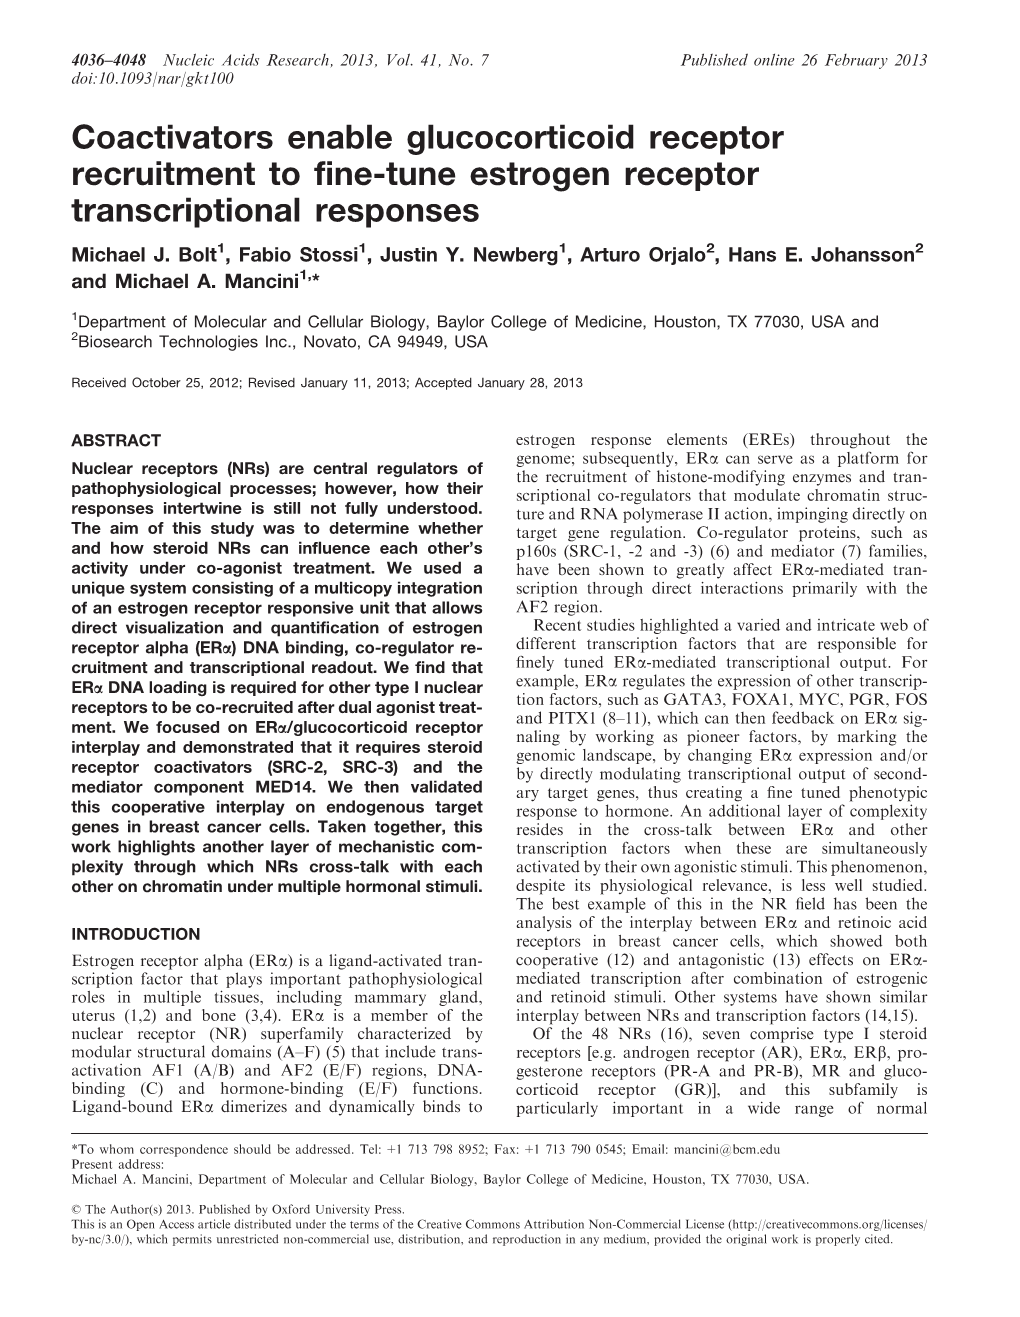 Coactivators Enable Glucocorticoid Receptor Recruitment to Fine-Tune Estrogen Receptor Transcriptional Responses Michael J